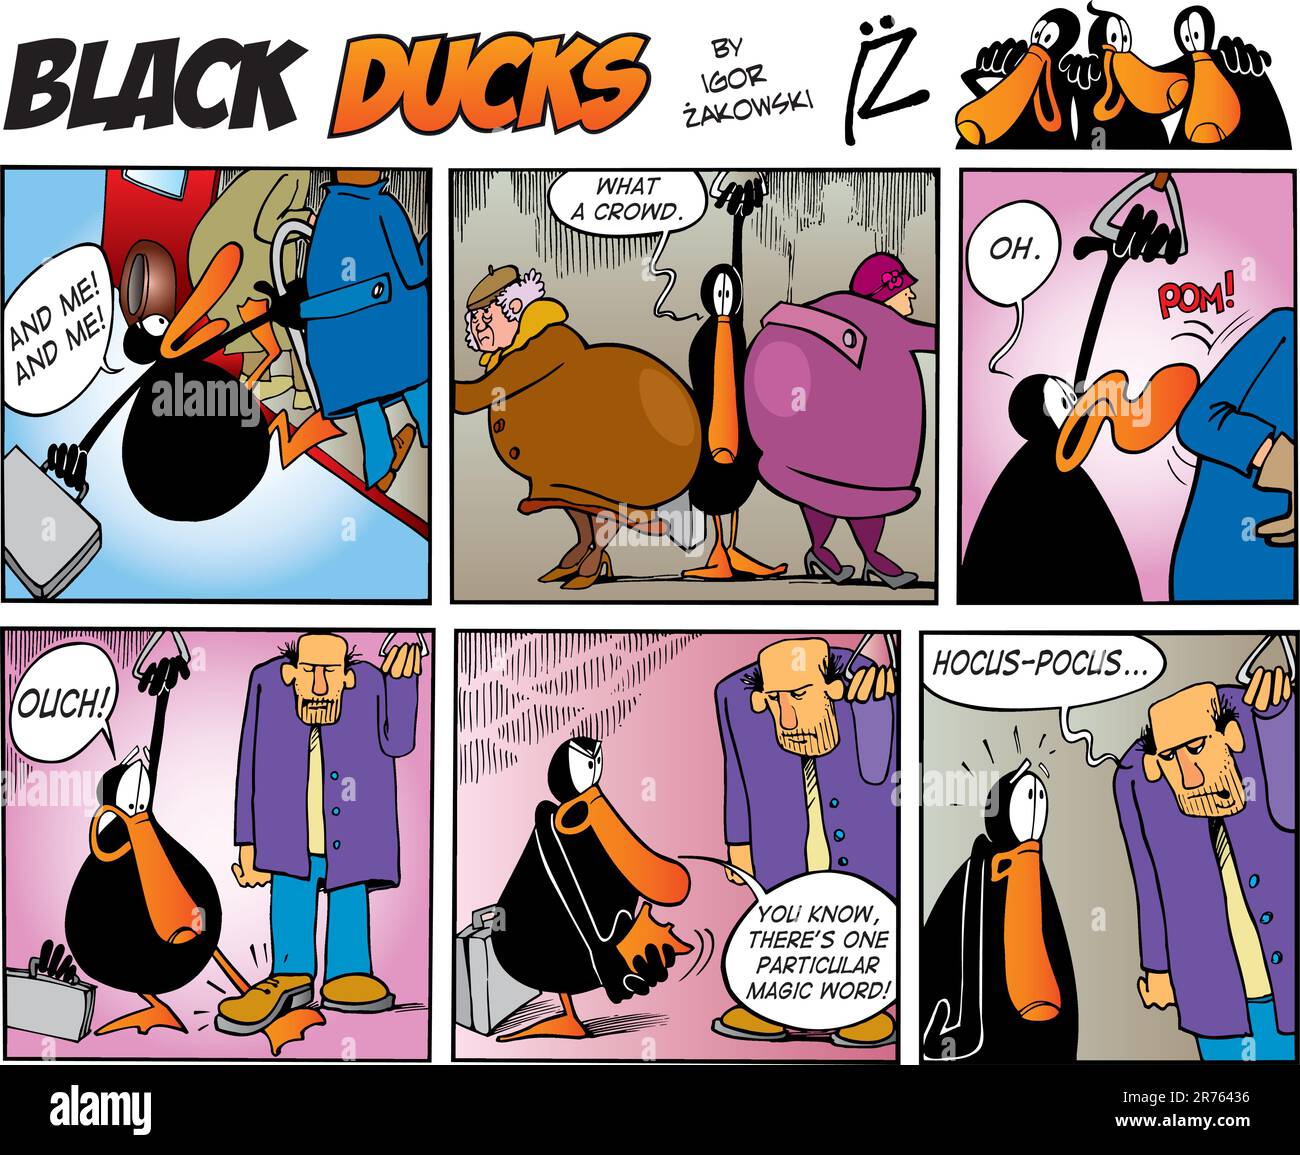 Black Ducks Comic Strip episode 5 Stock Vector